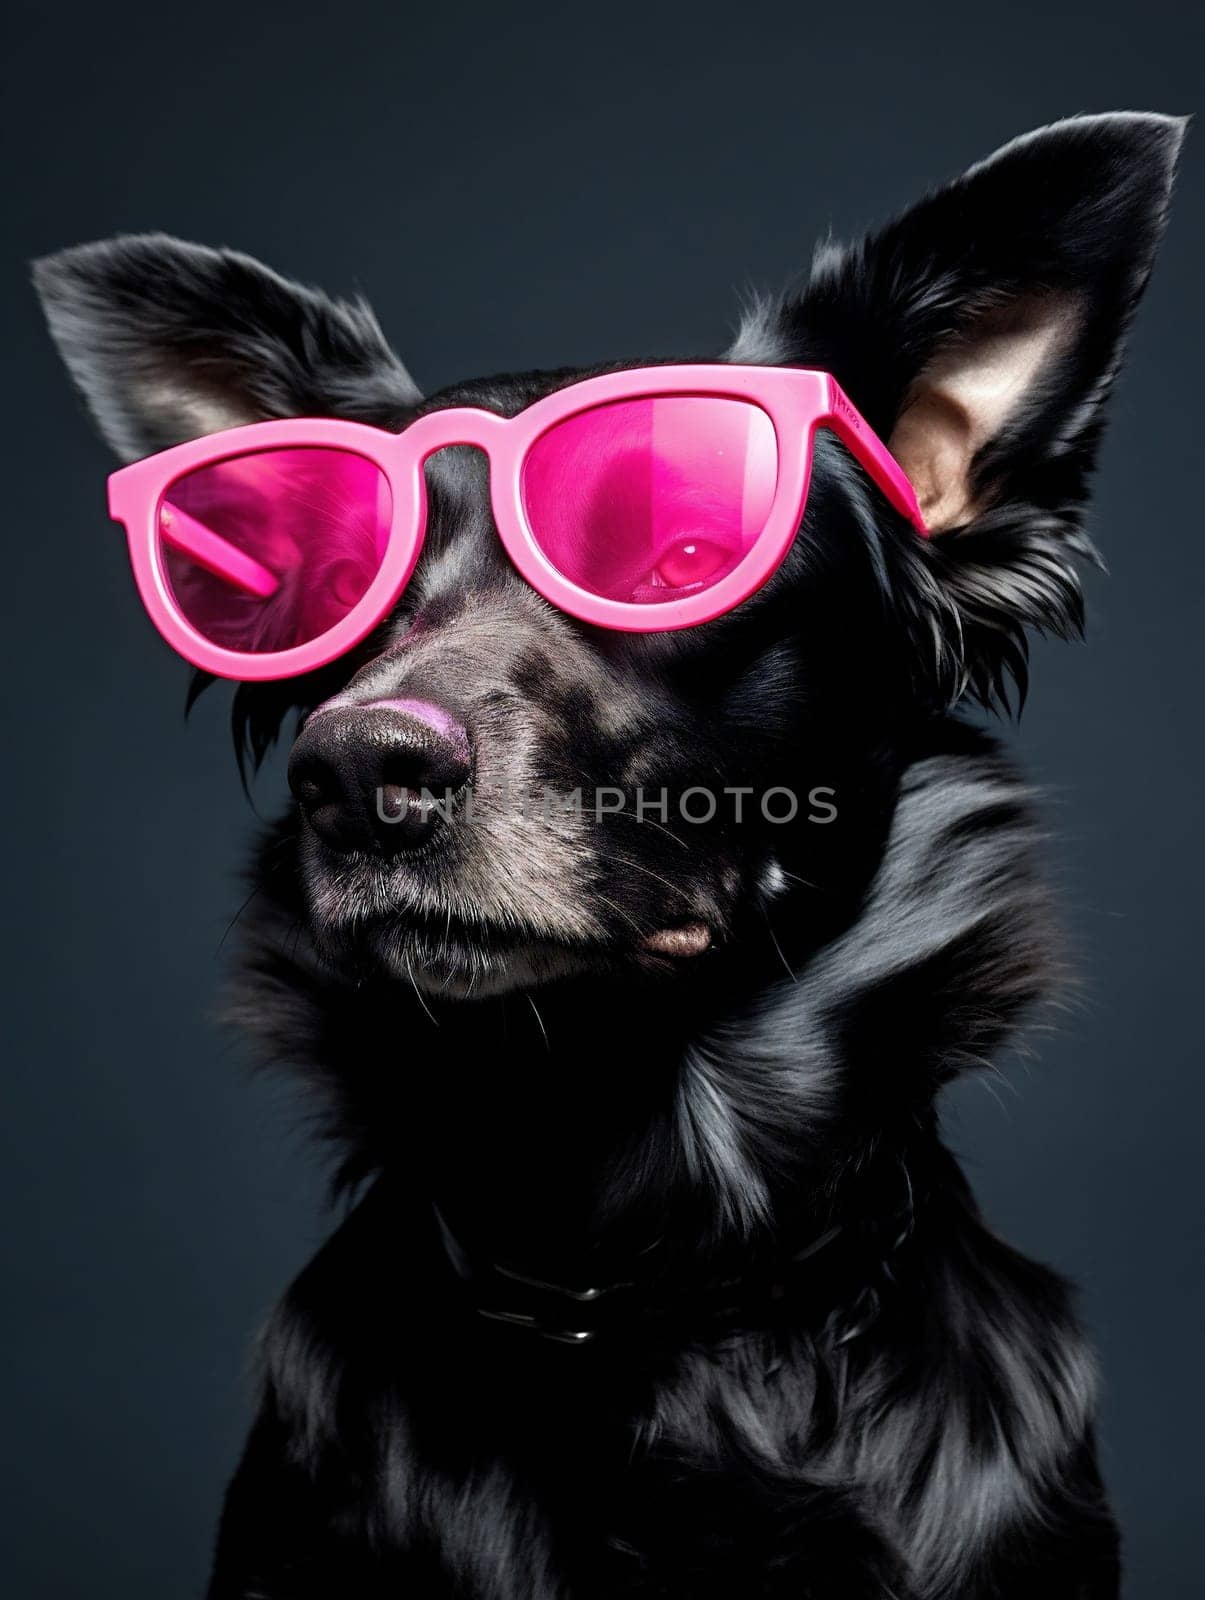 Dog white funny fun glasses domestic animal sunglasses background portrait cute canine goggles breed adorable happy puppy pet